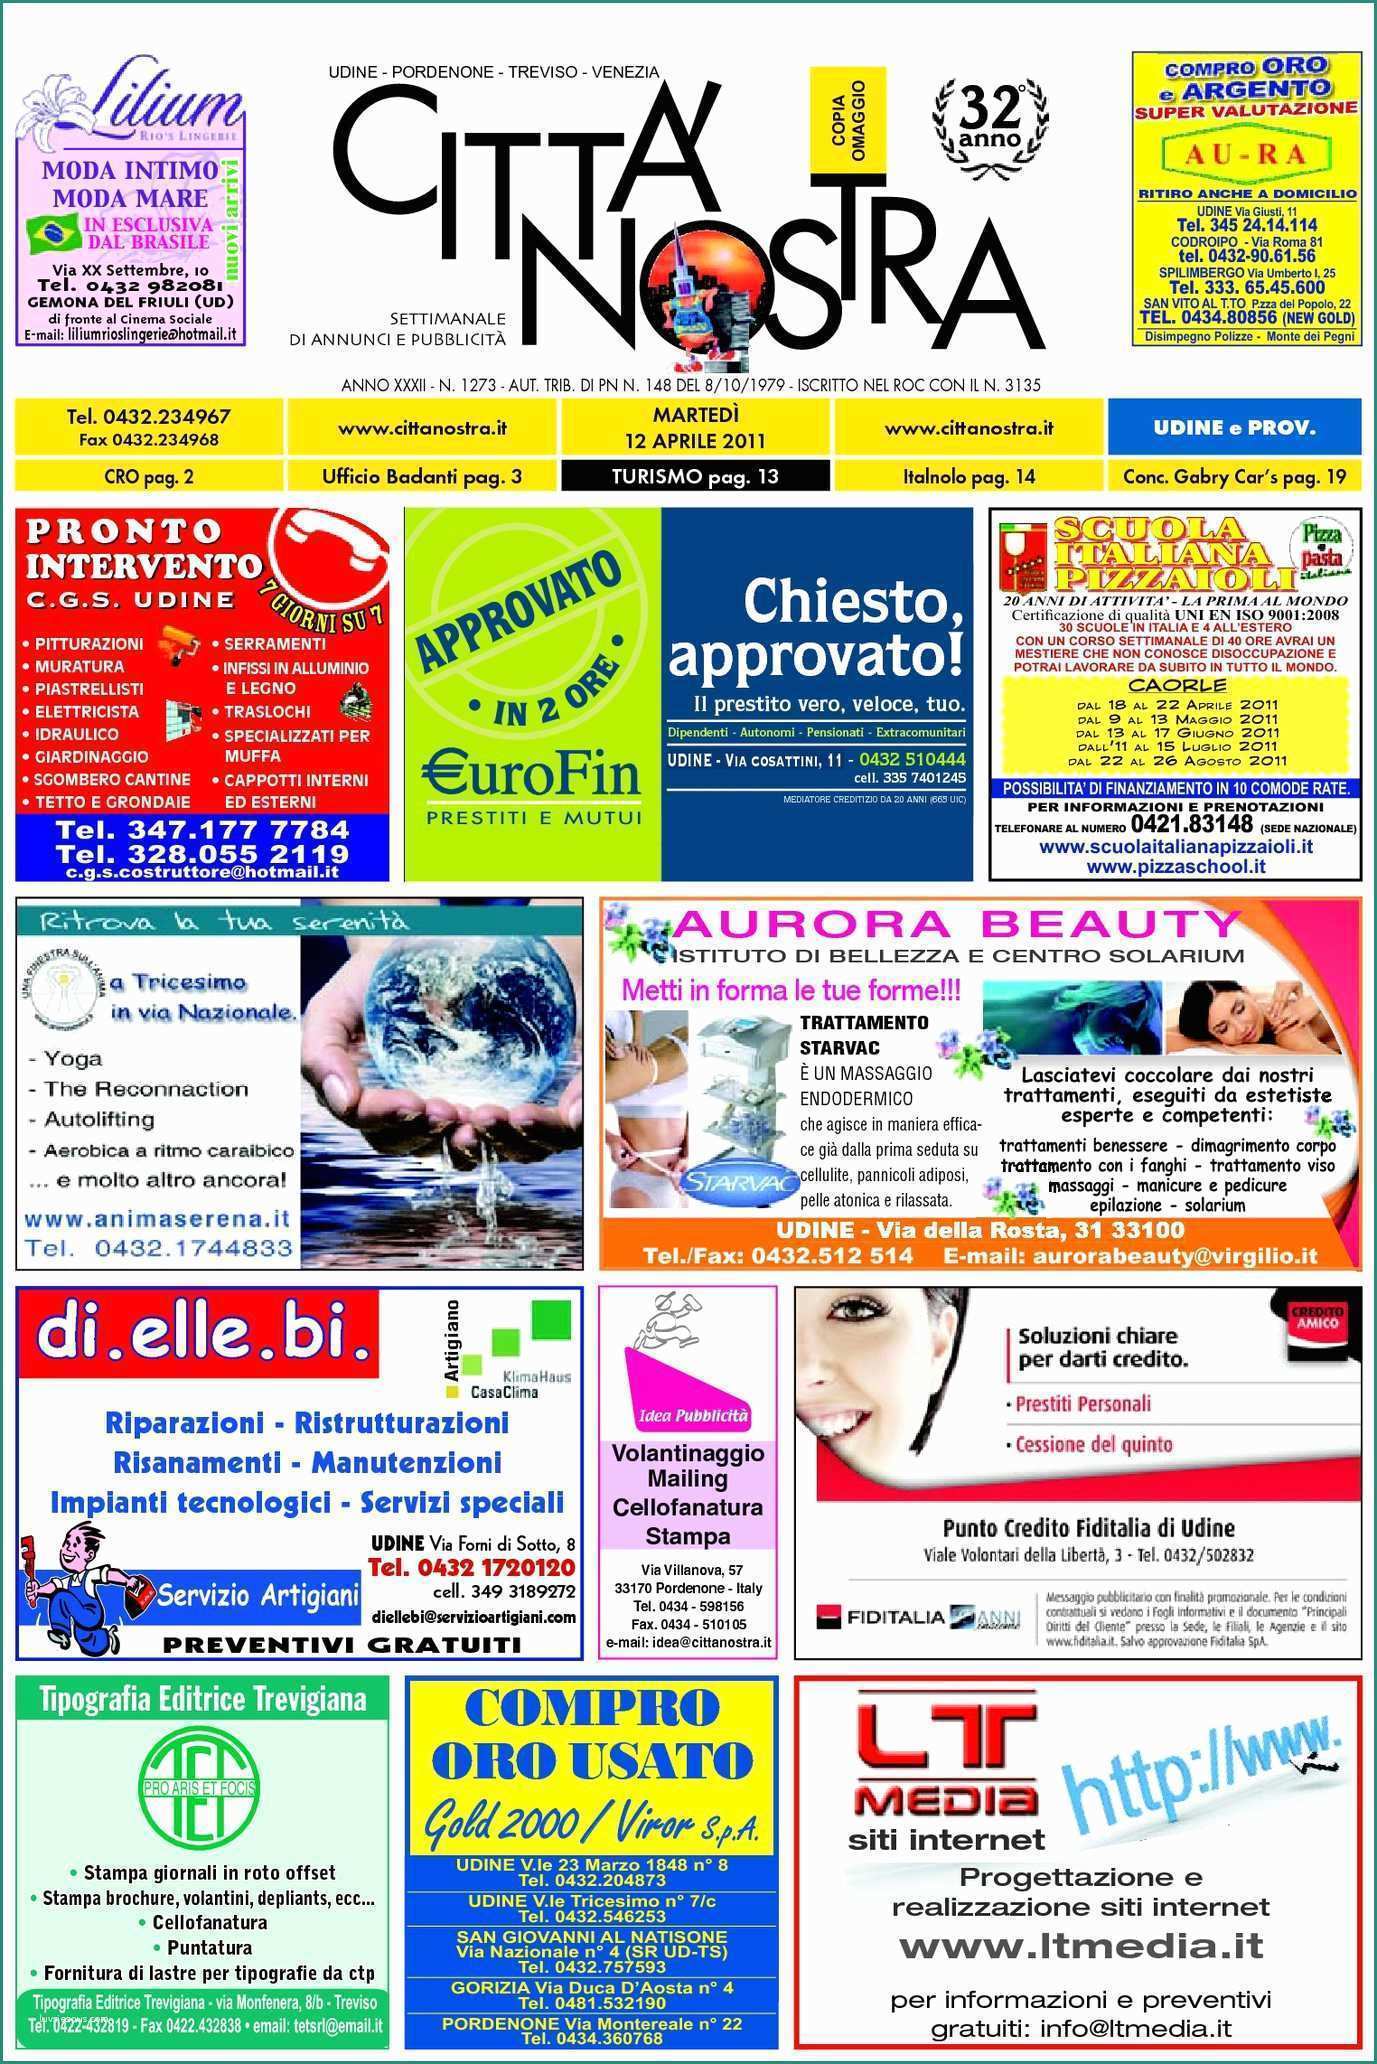 Divano Posti E Calaméo Citt  Nostra Udine Del 12 04 2011 N 1273